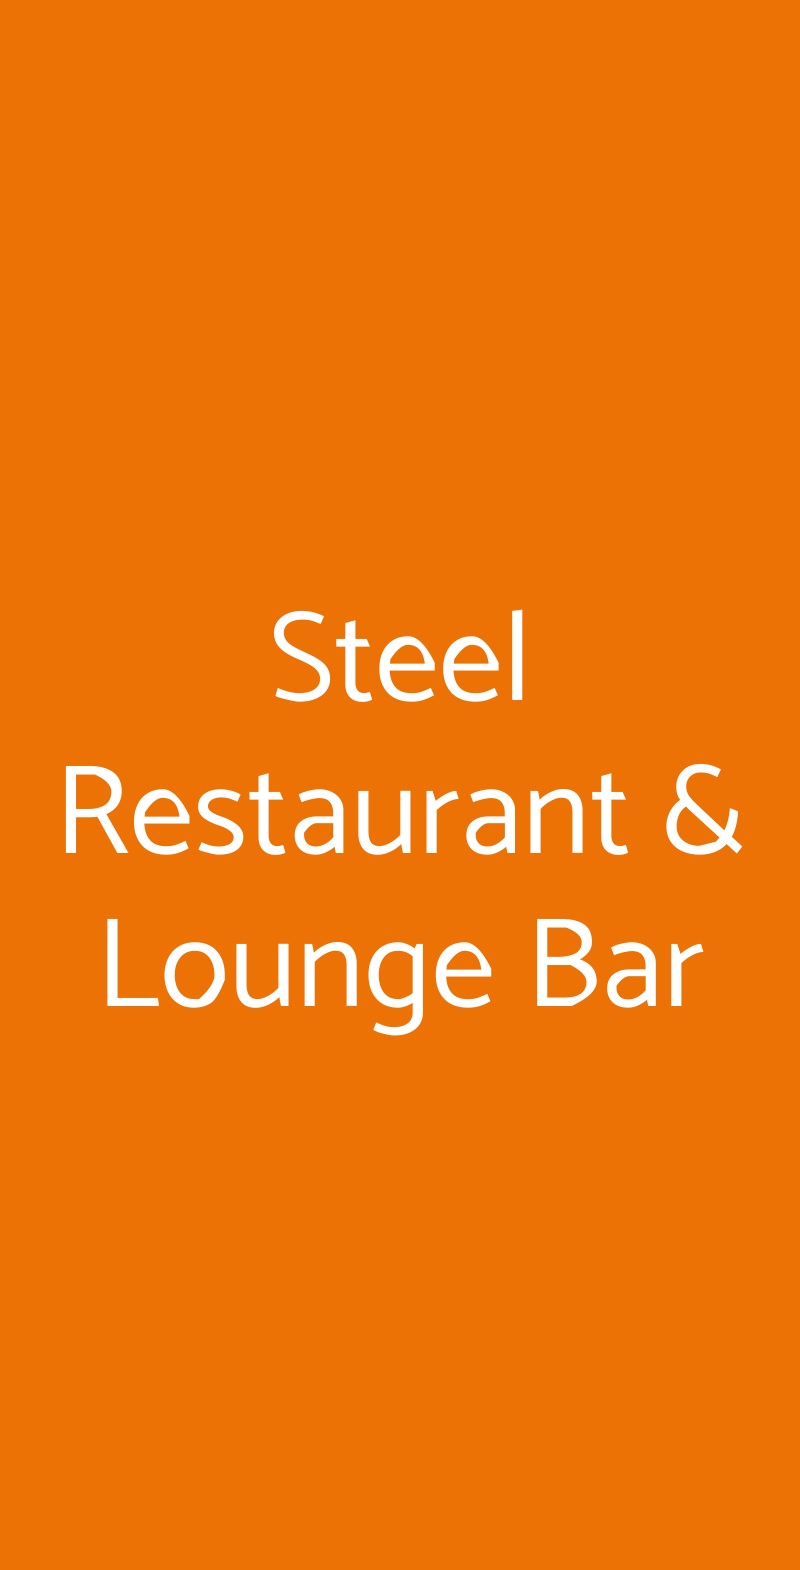 Steel Restaurant & Lounge Bar Tornaco menù 1 pagina